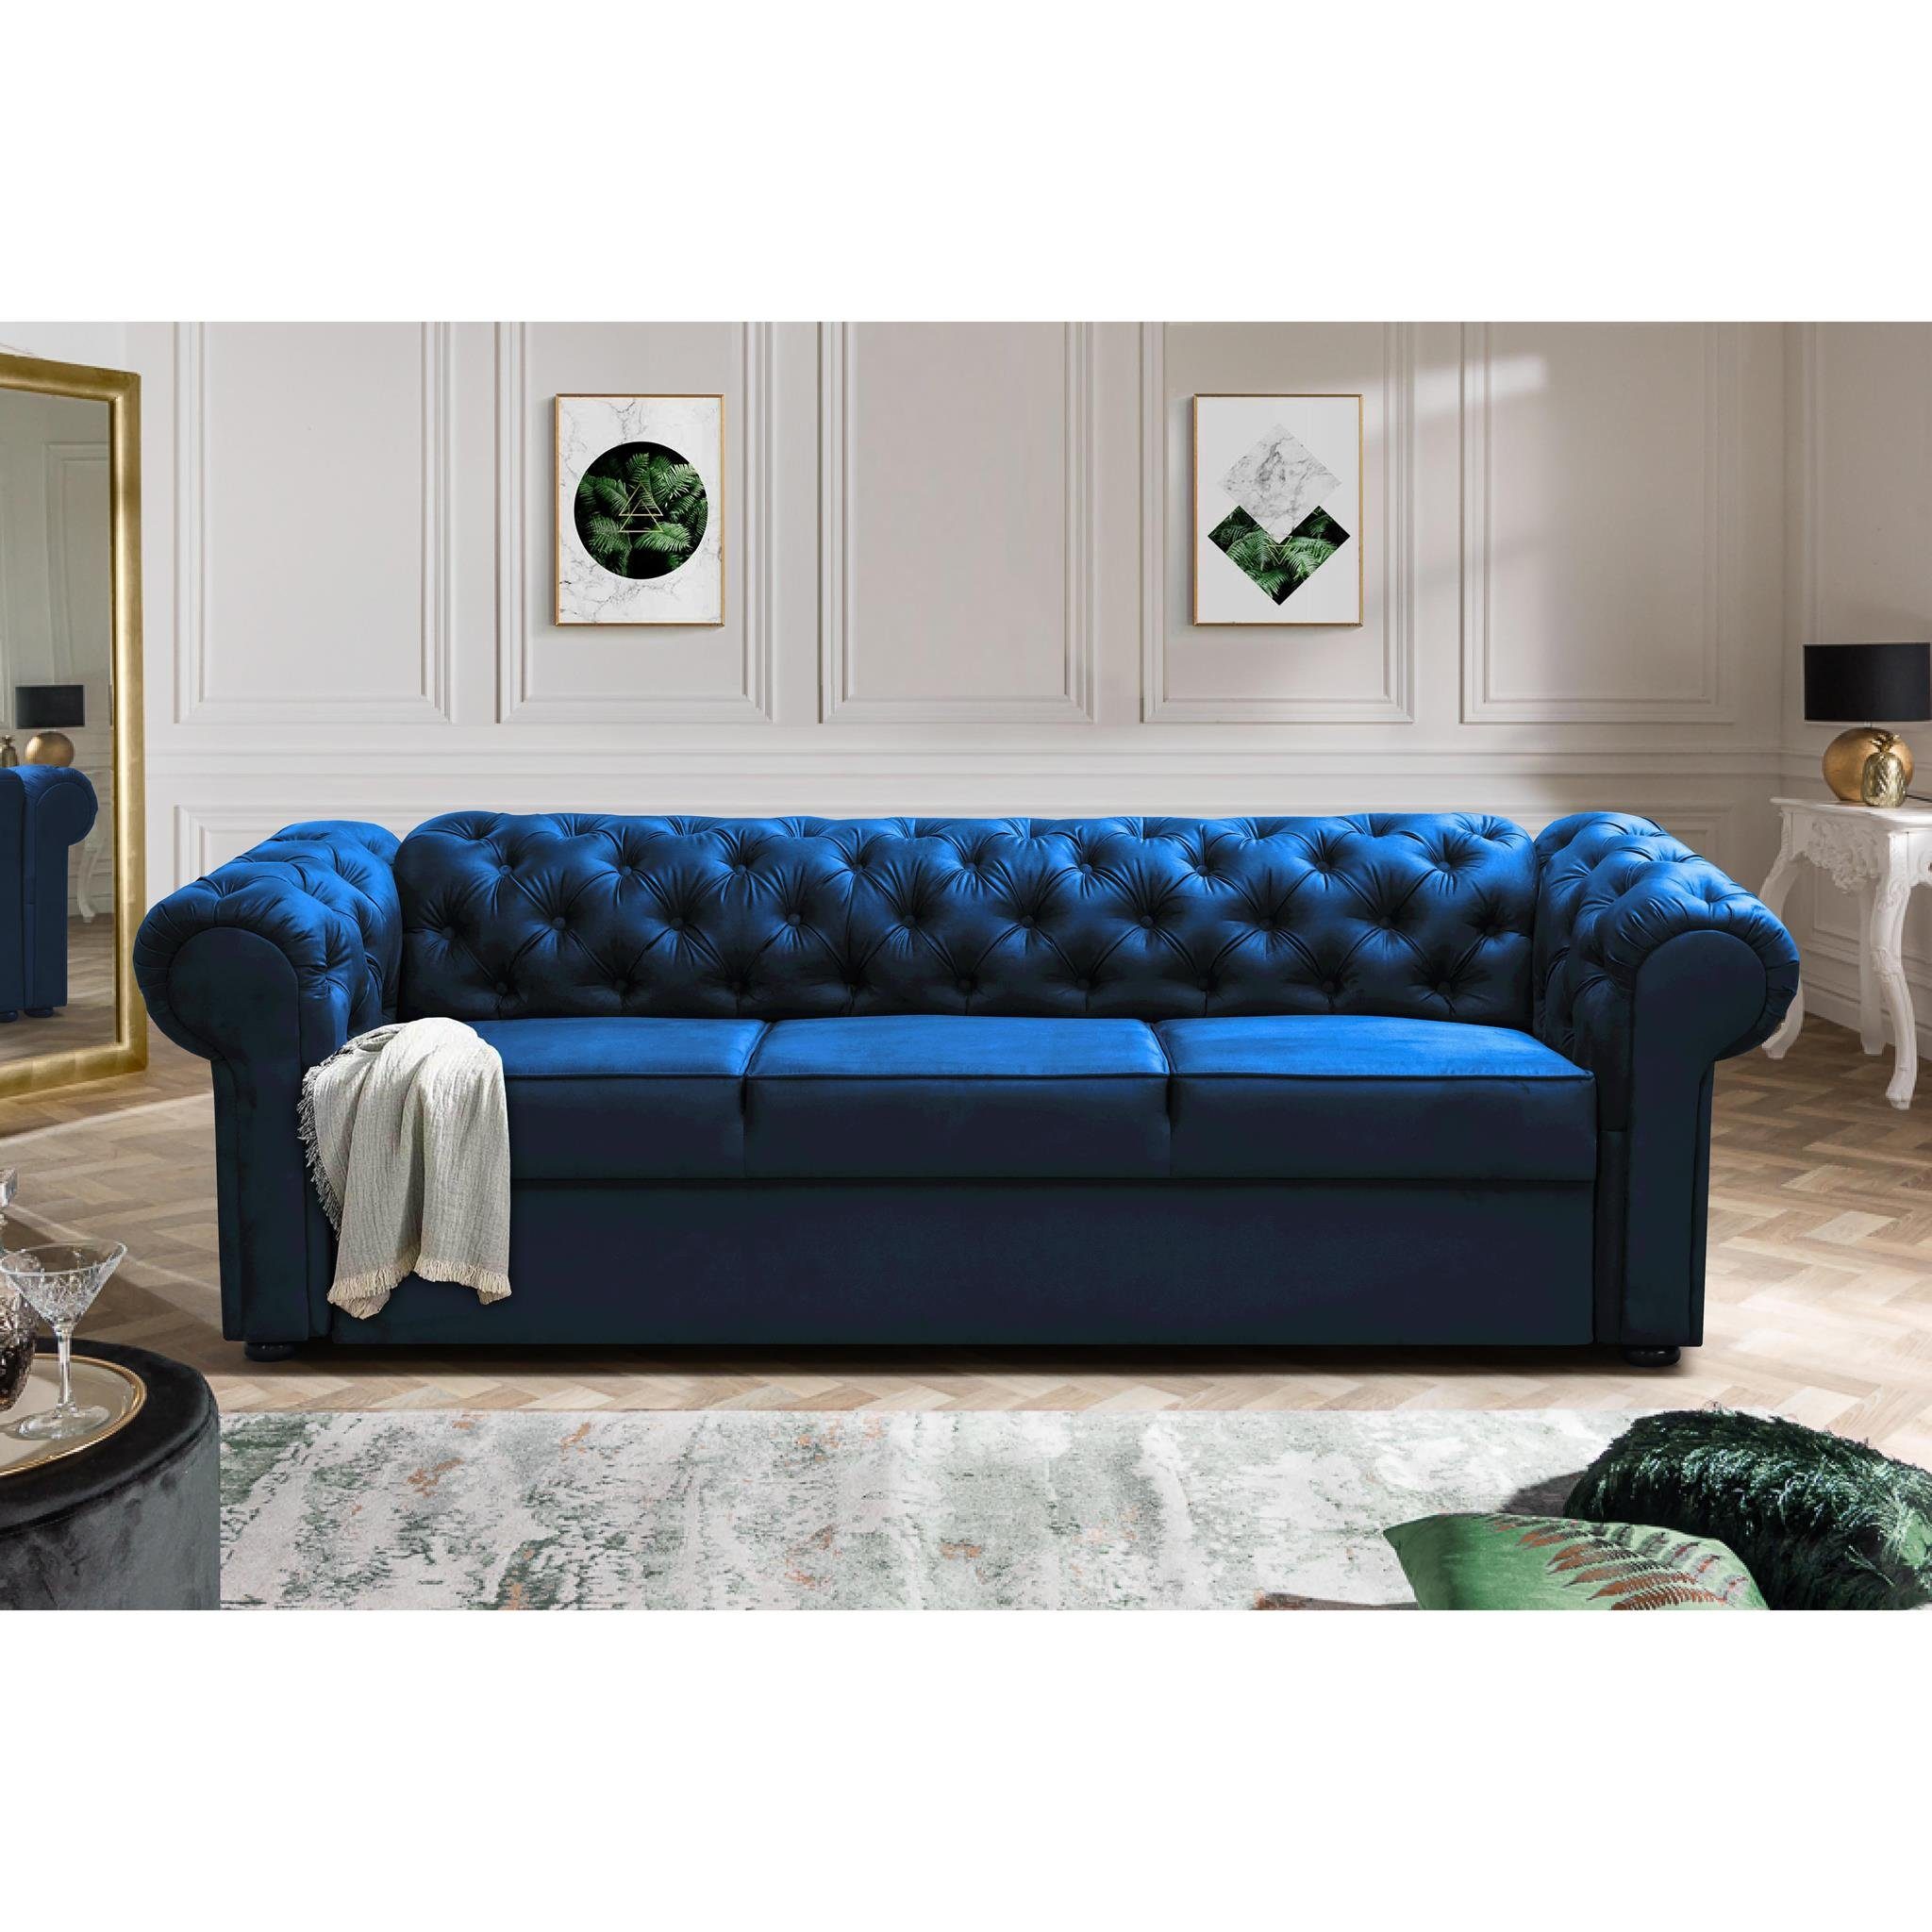 Beautysofa 3-Sitzer Chester, Sofa mit Steppung, Dreisitzer Sofa aus Velours, mit Relaxfunktion Marineblau (kronos 09)